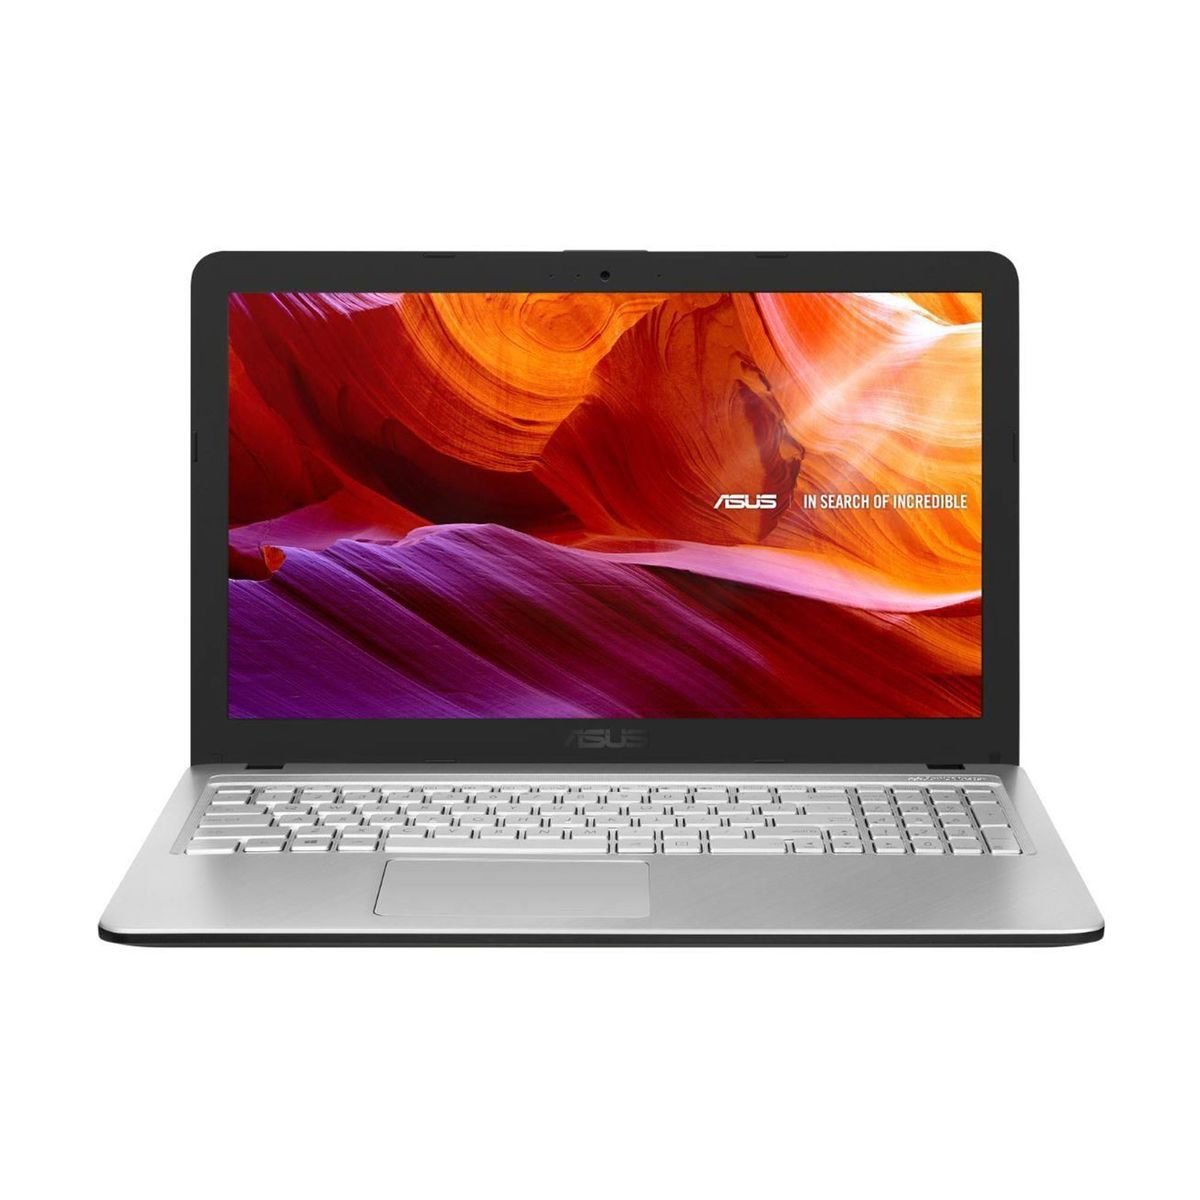 ASUS Notebook X543UA-GQ2140T Notebook, Intel Core i3-7020U, 4GB RAM, 1TB HDD, 15.6 Inch, Windows 10, Silver